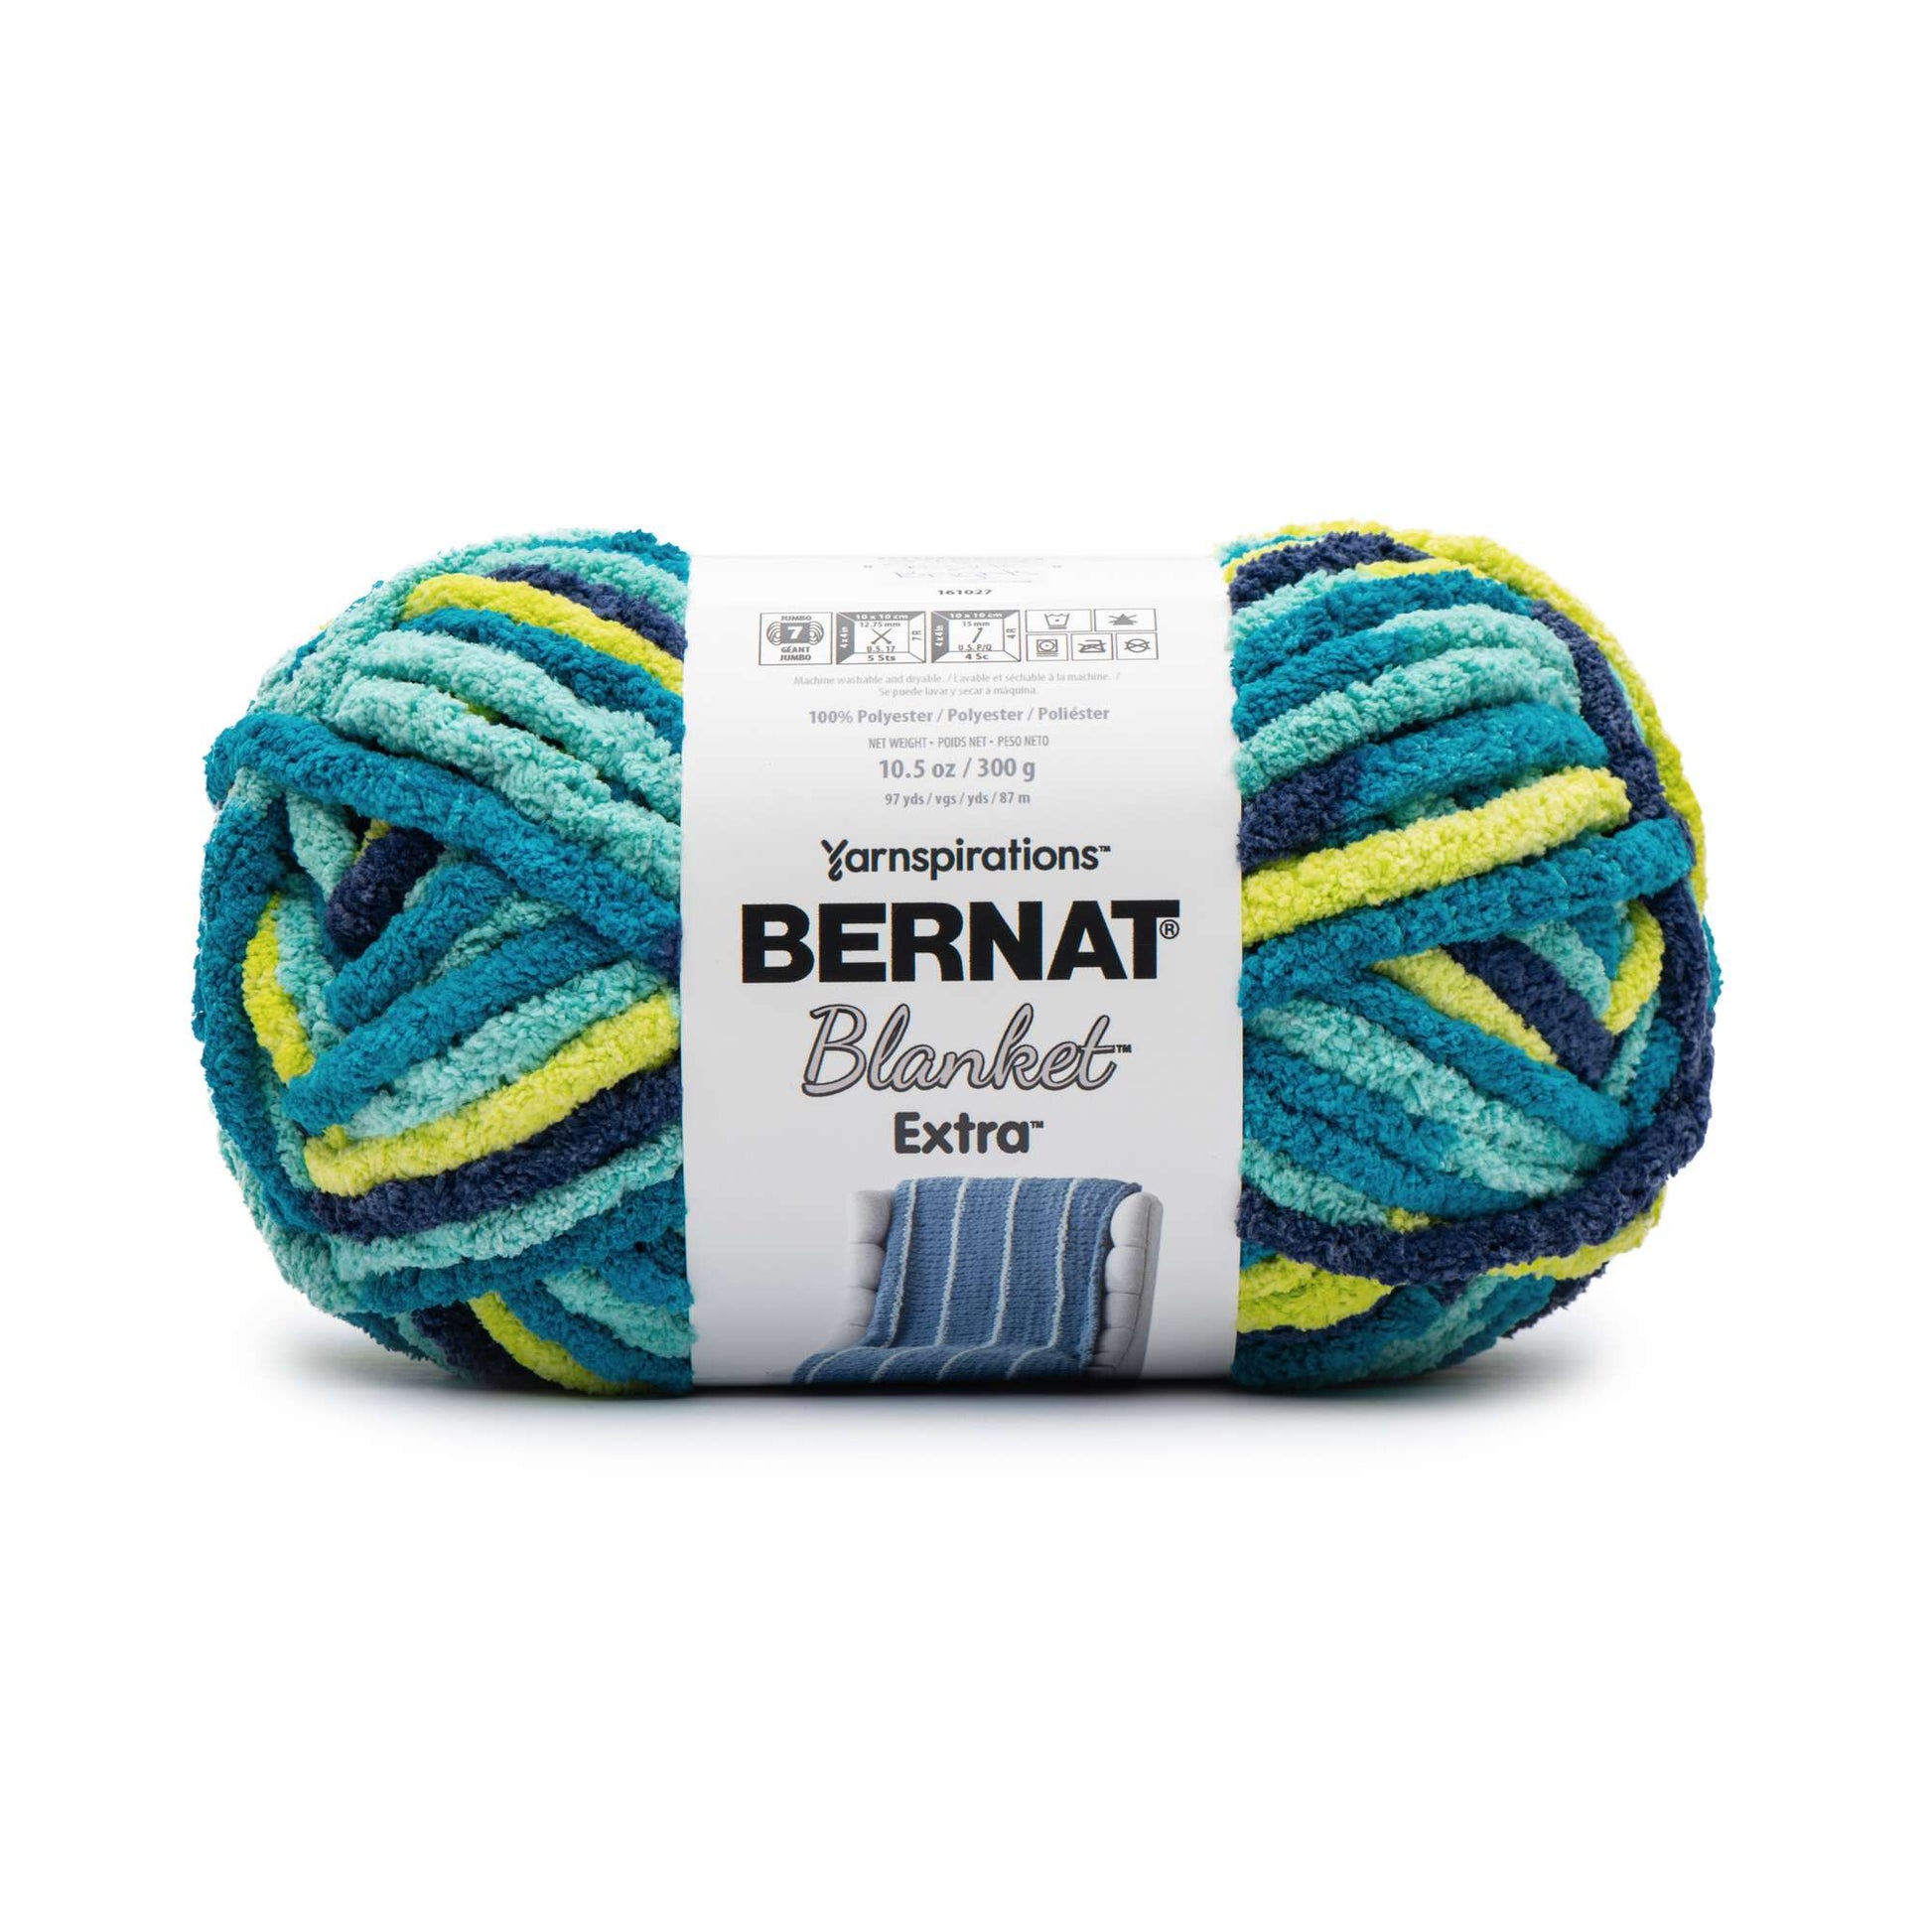  Bernat Blanket Extra Yarn, Big Ball 10.5 Oz, Jumbo 7, Light Teal